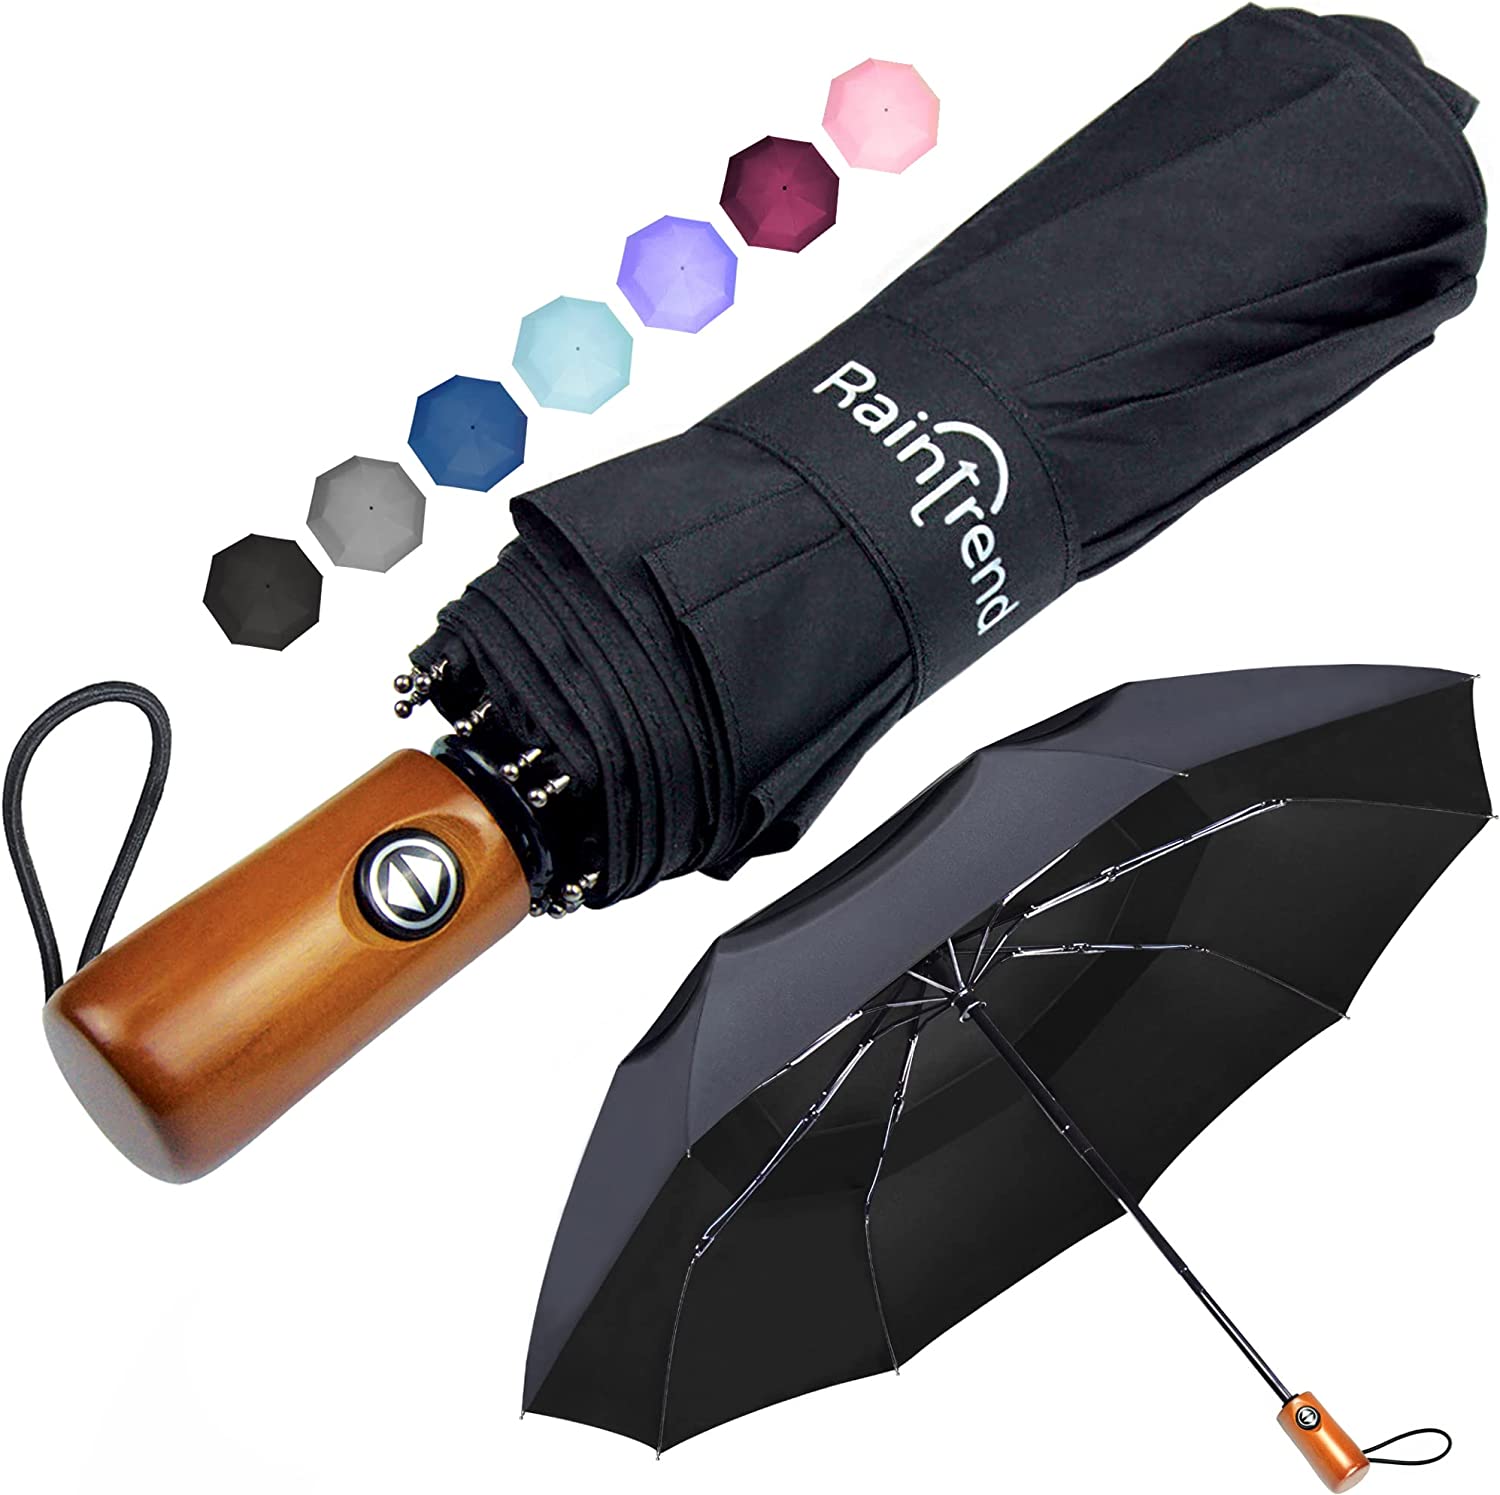 NEW Premium Large Windproof Double Canopy Umbrella for Rain - Travel Umbrella - Compact Automatic Umbrella - Folding Umbrella for